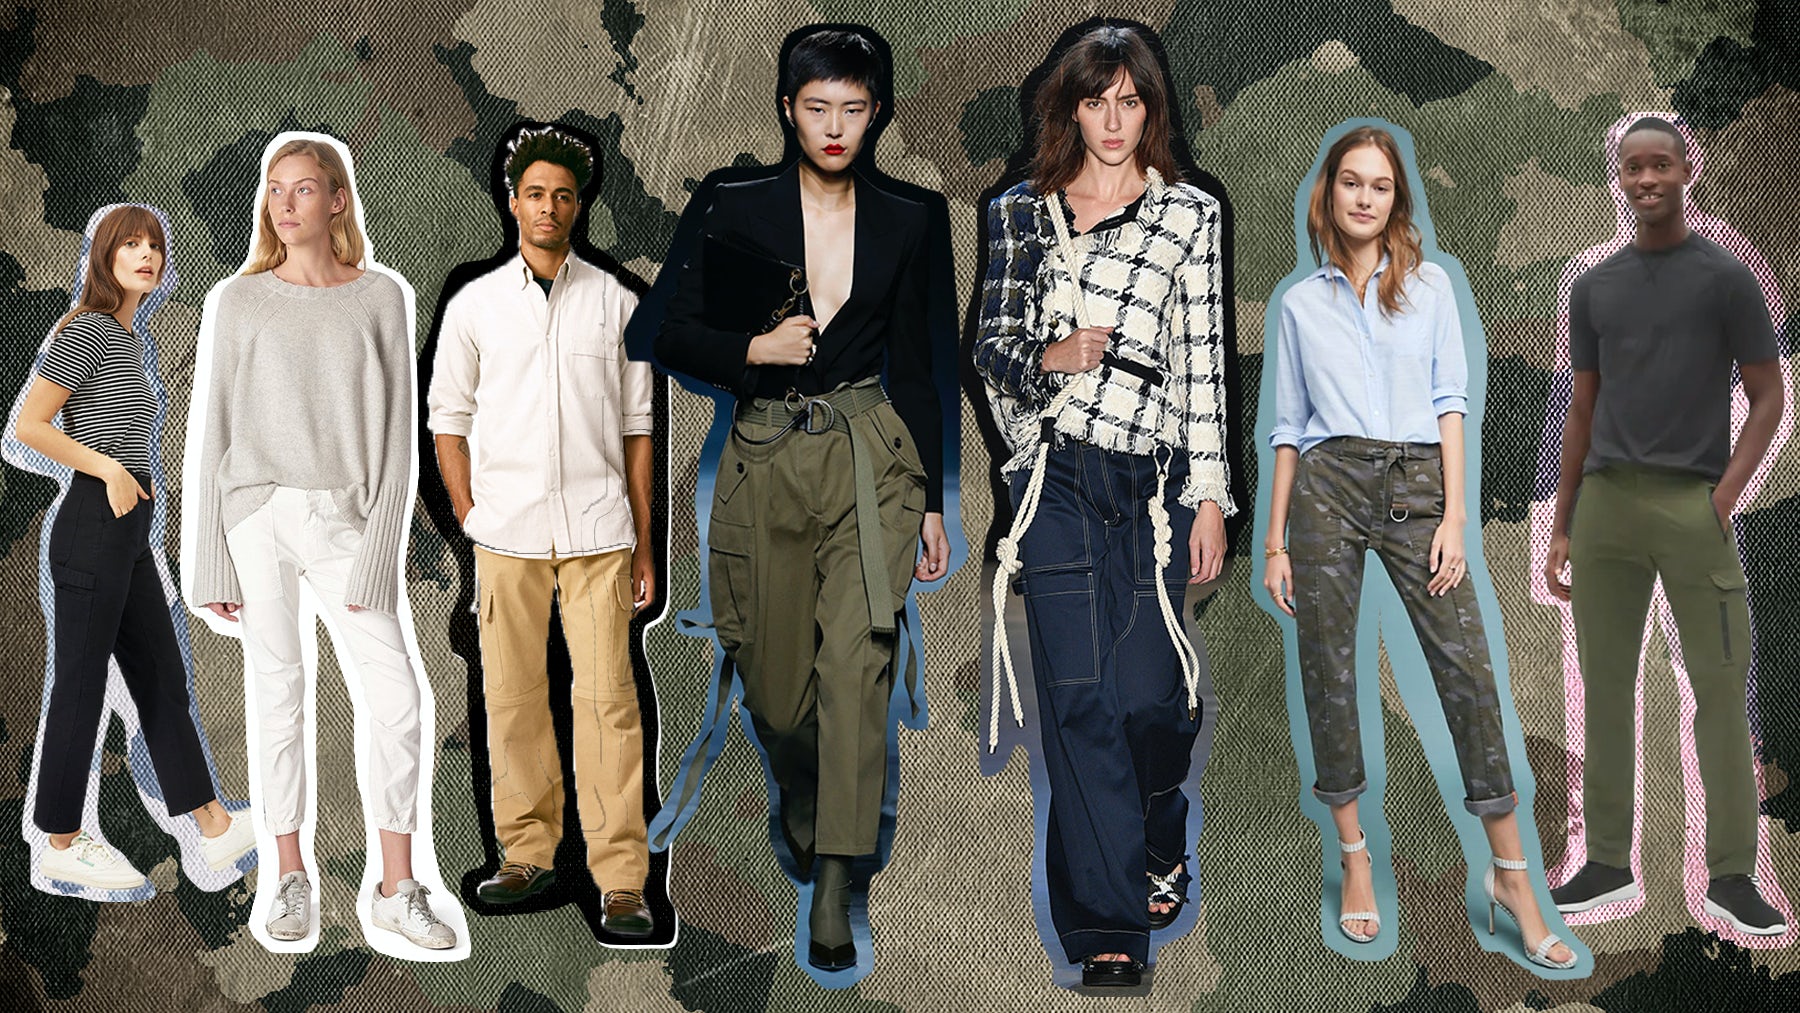 Summer Games Cargo Pants - Olive | Fashion Nova, Mens Pants | Fashion Nova